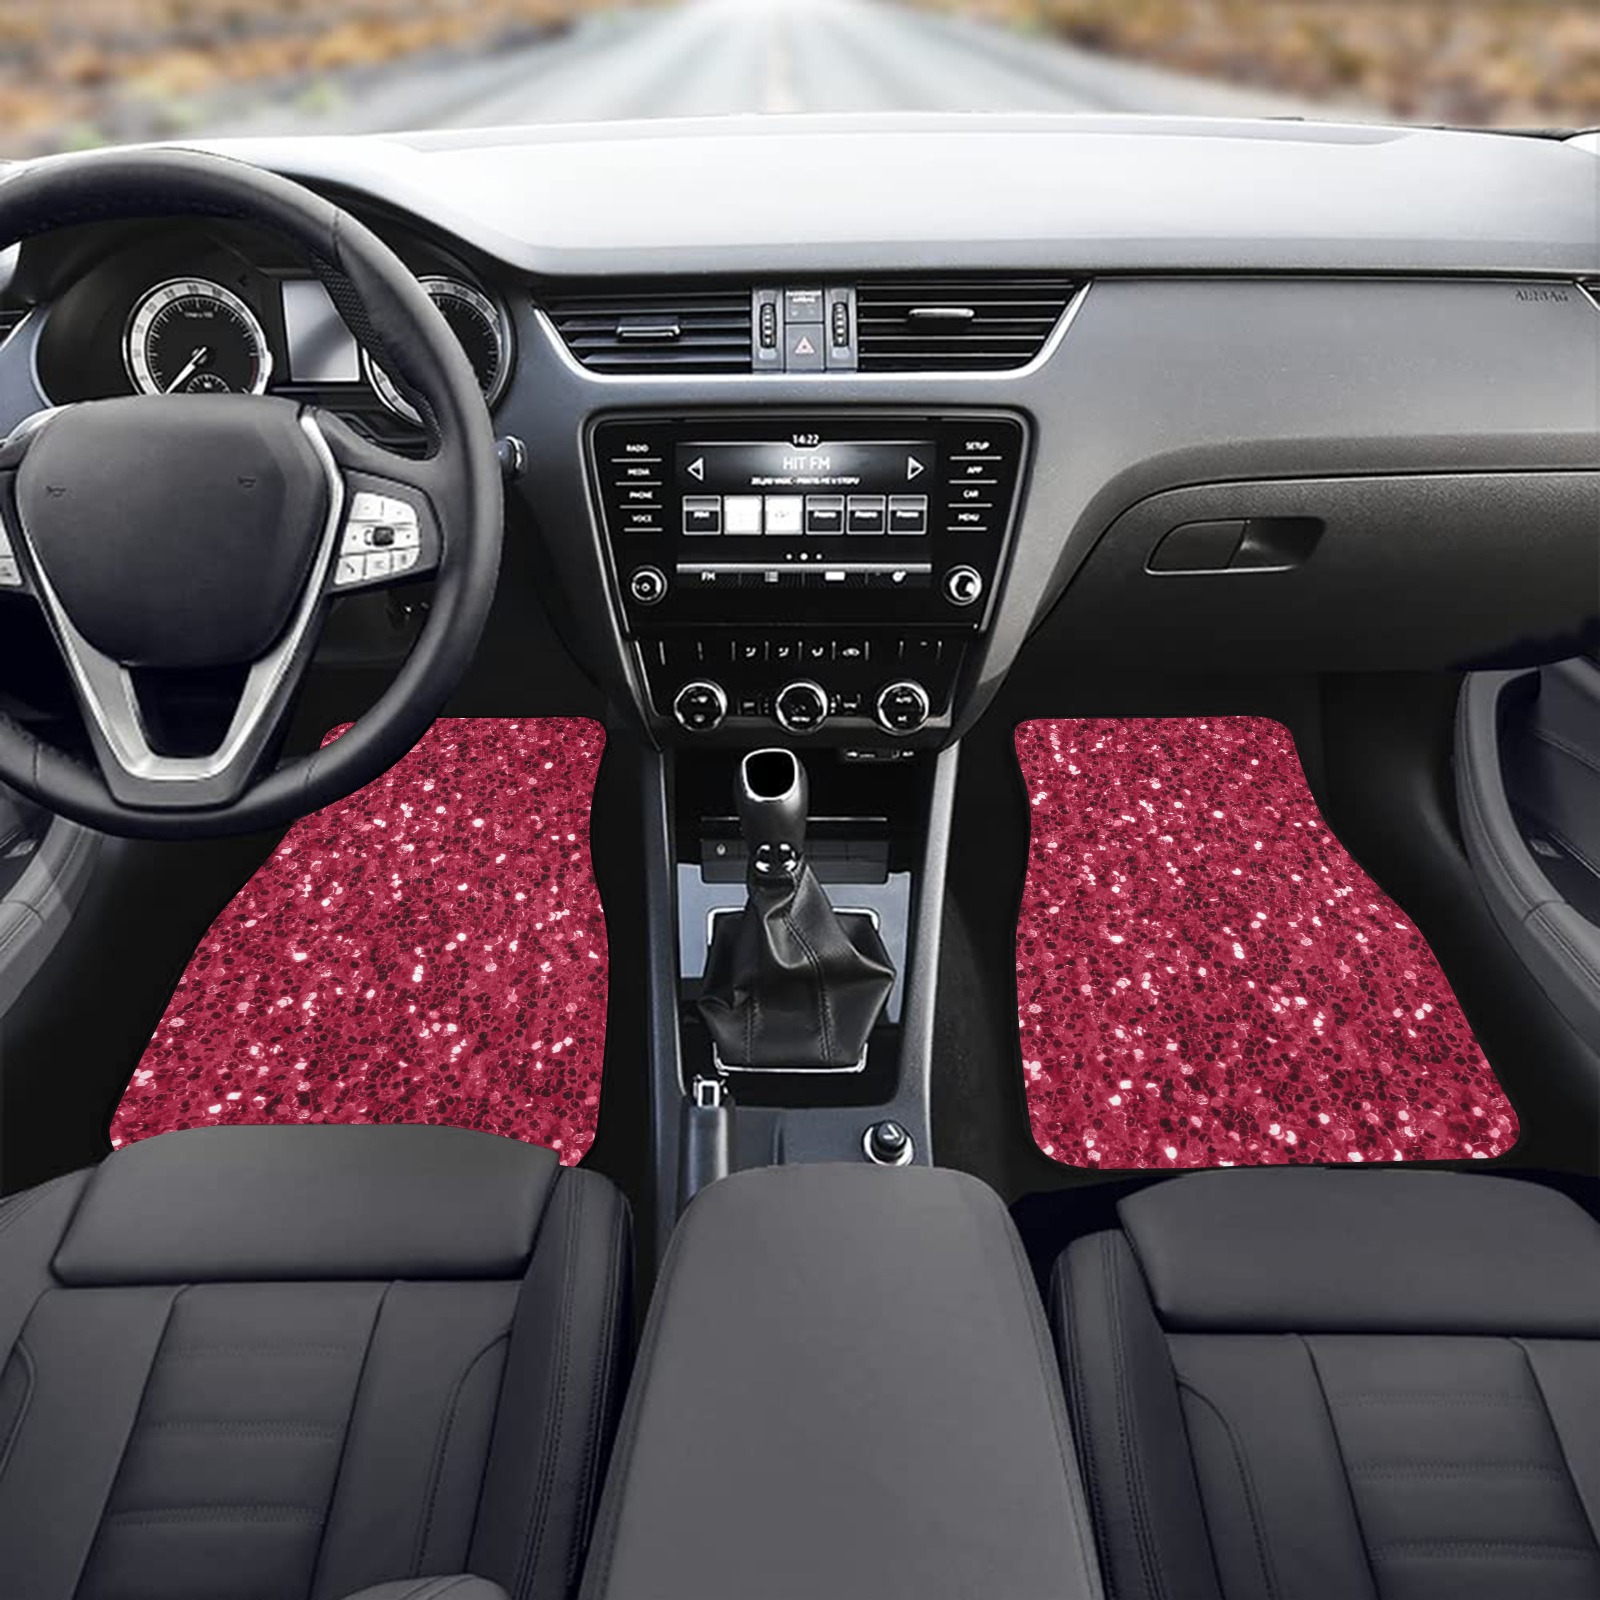 Magenta dark pink red faux sparkles glitter Front Car Floor Mat (2pcs)